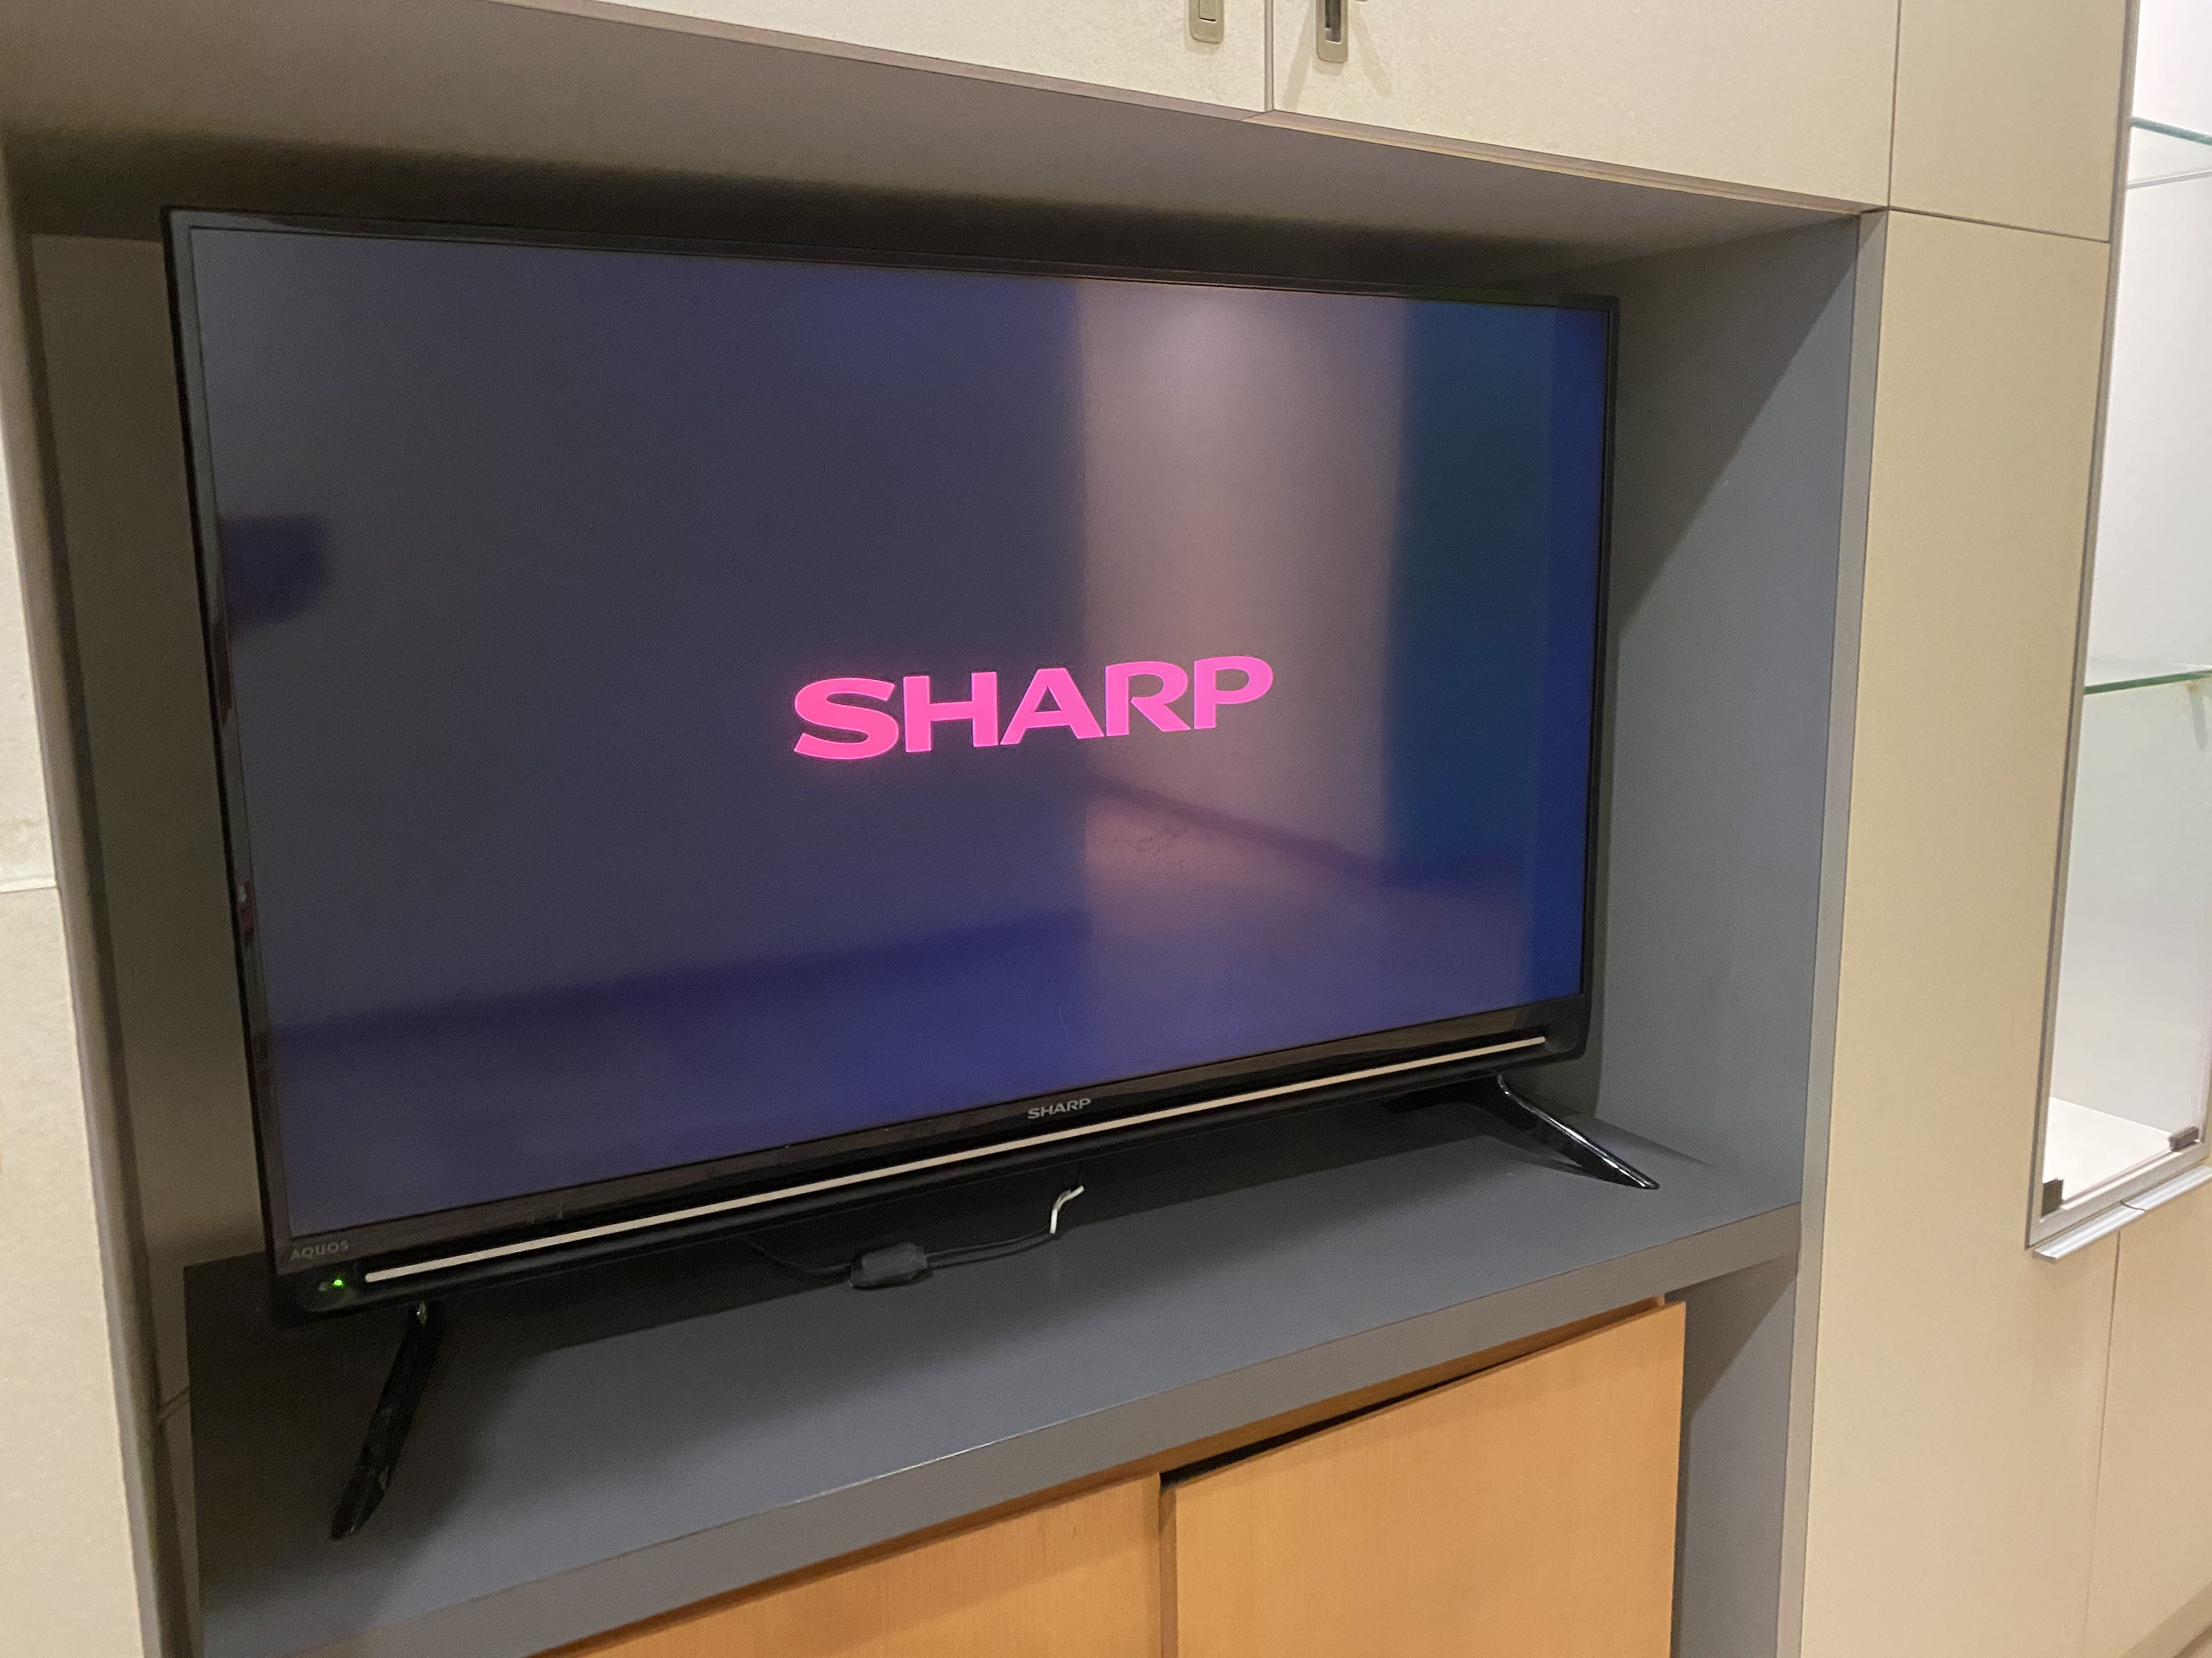 CLEARANCE: Sharp TV Aquos SA5200 40 inch, TV  Home Appliances, TV   Entertainment, TV on Carousell